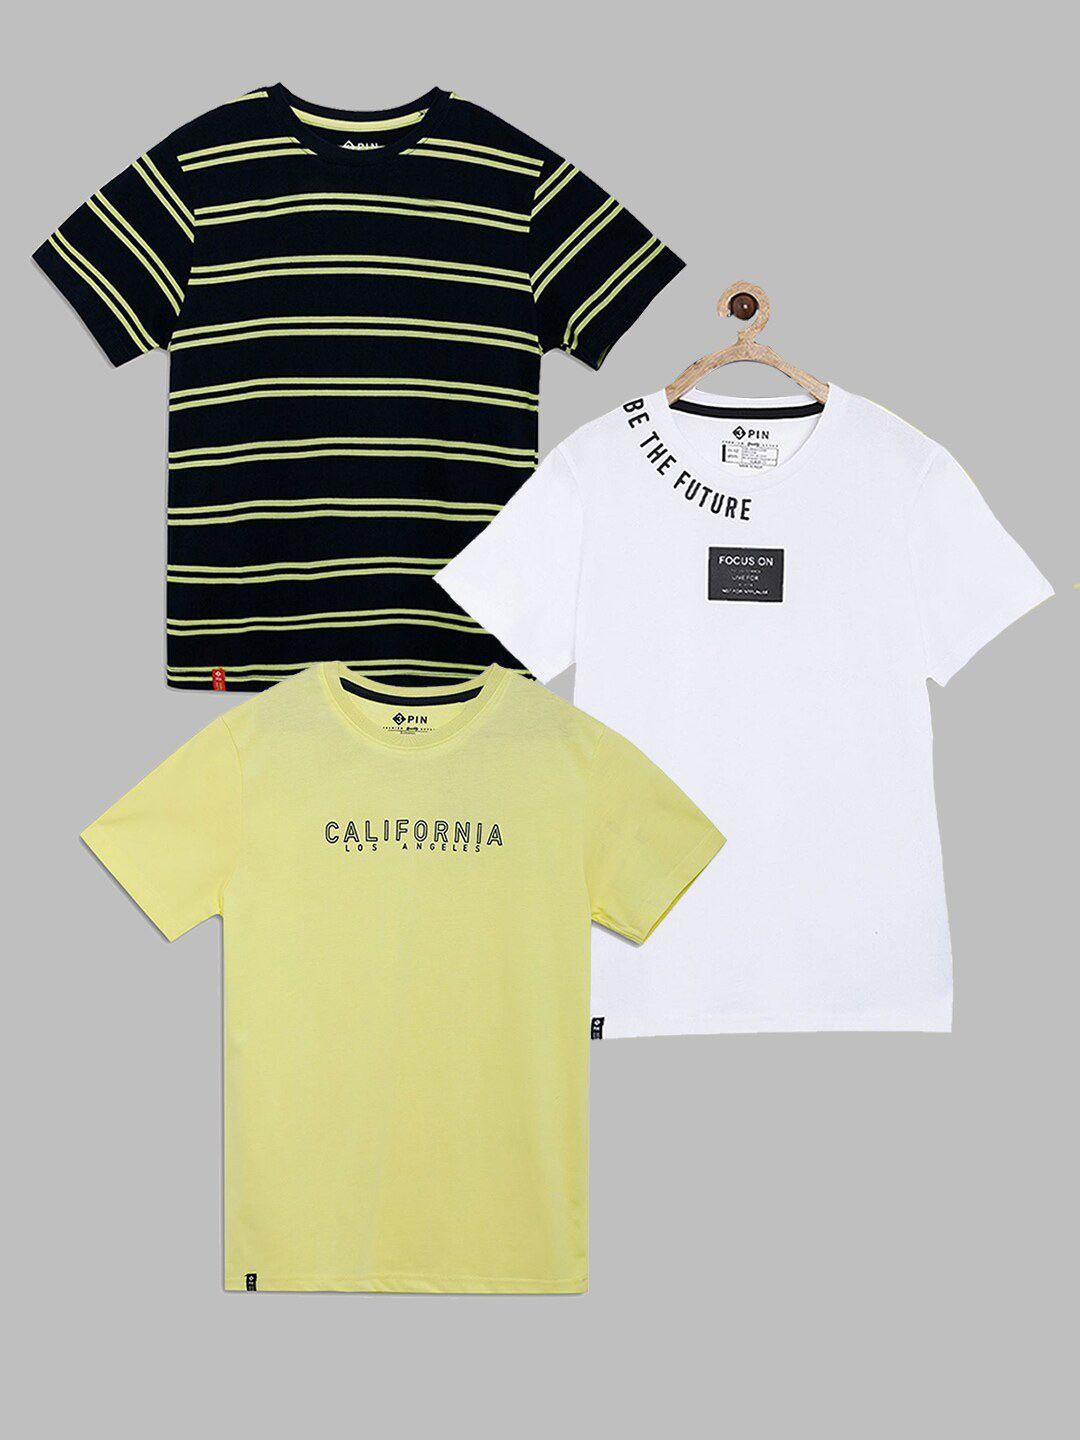 3pin boys  yellow and white typography 3 striped monochromet-shirt